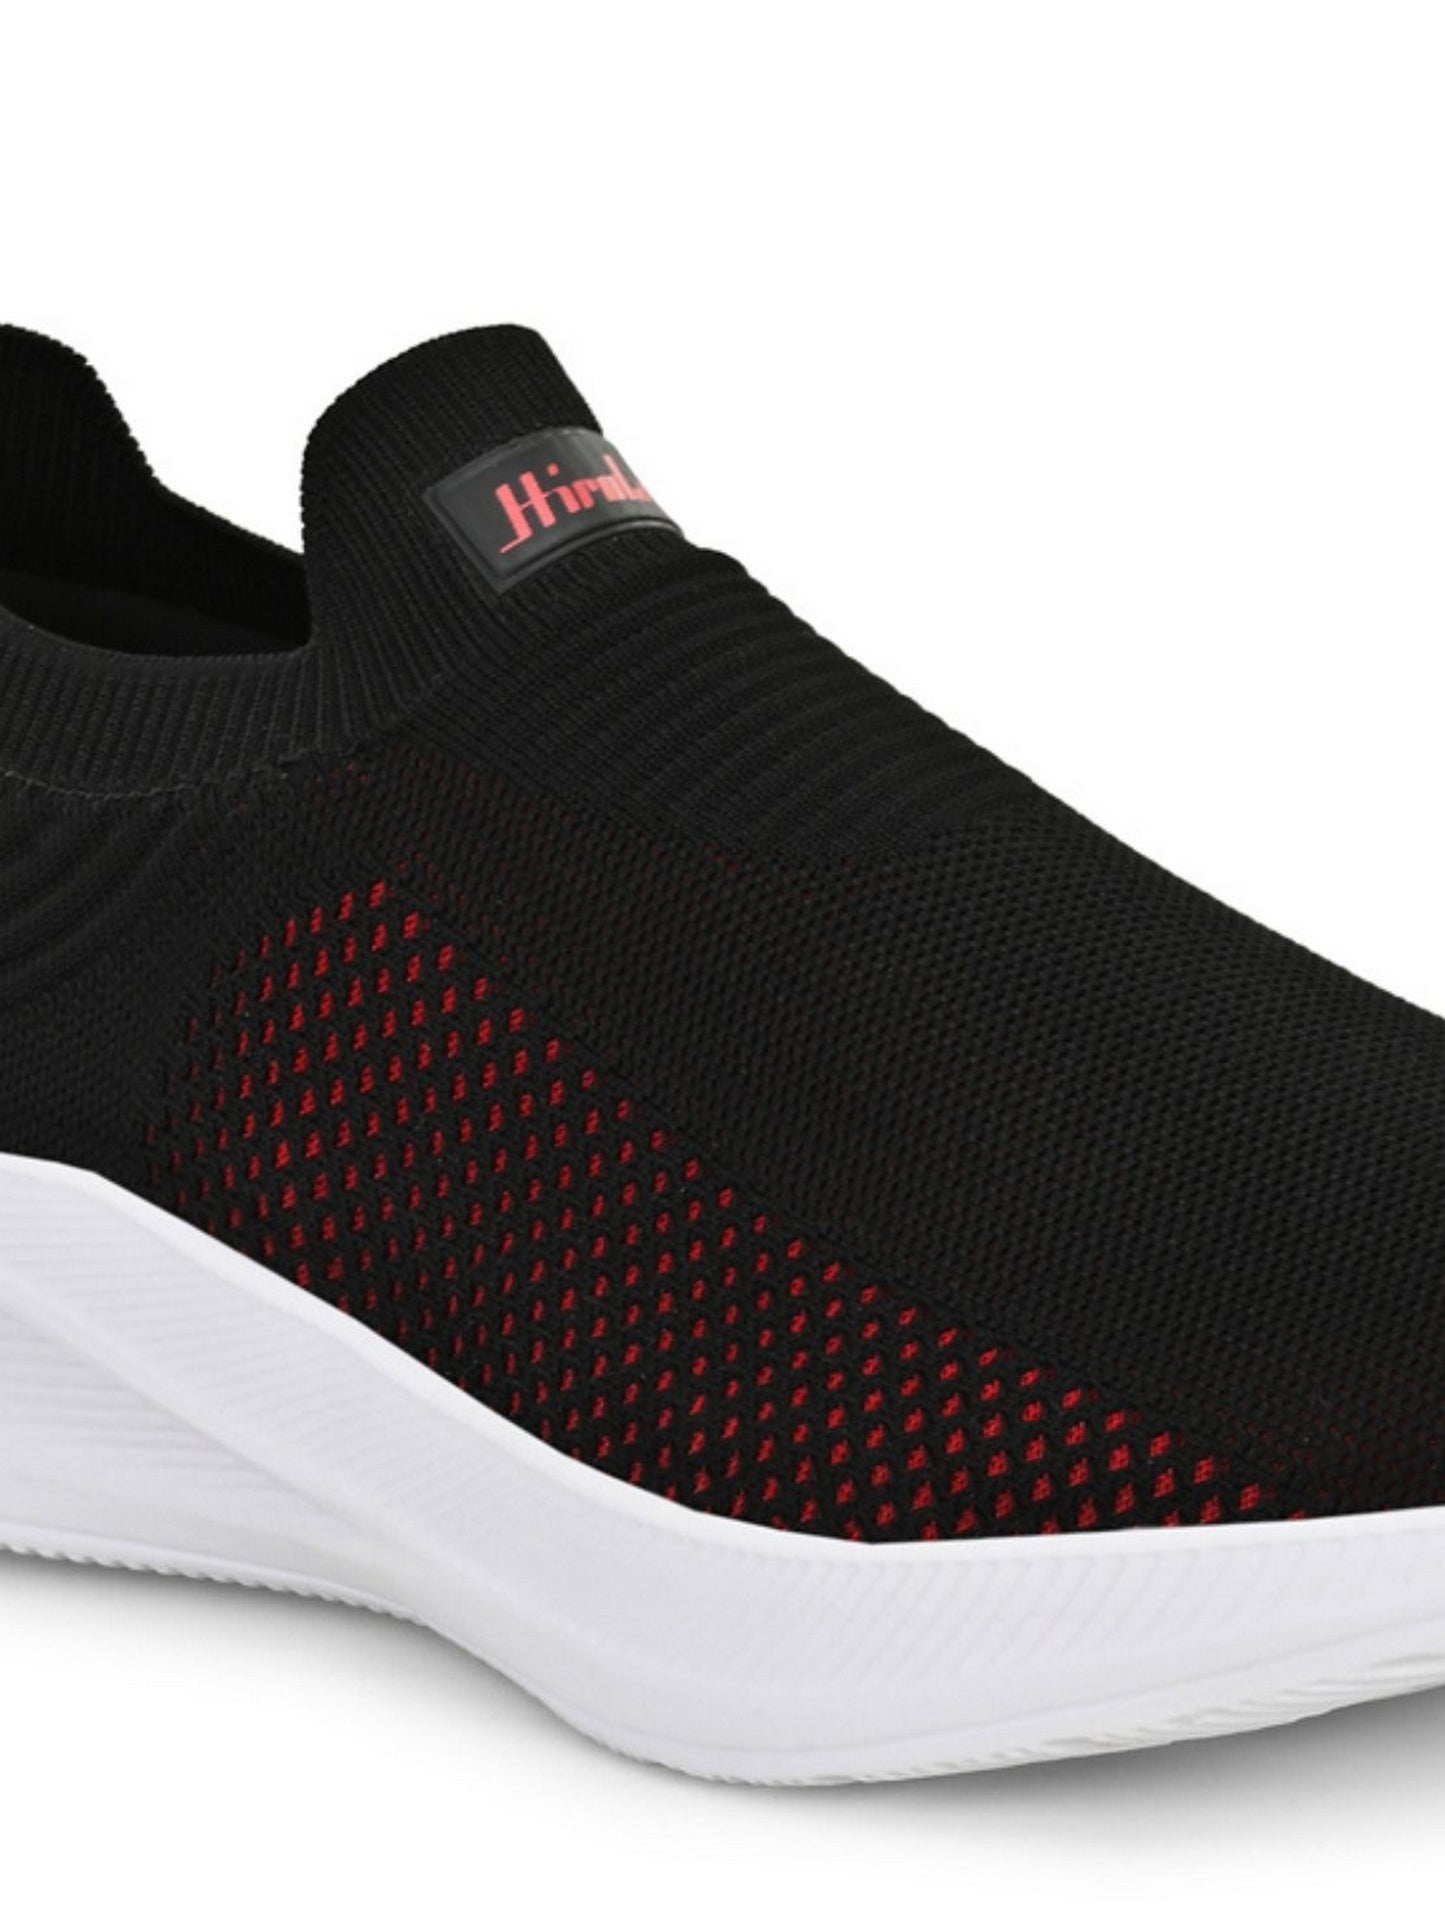 Hirolas® Men's  GlideFit Sports Running Shoes.- Black/Red HRL2080BLR